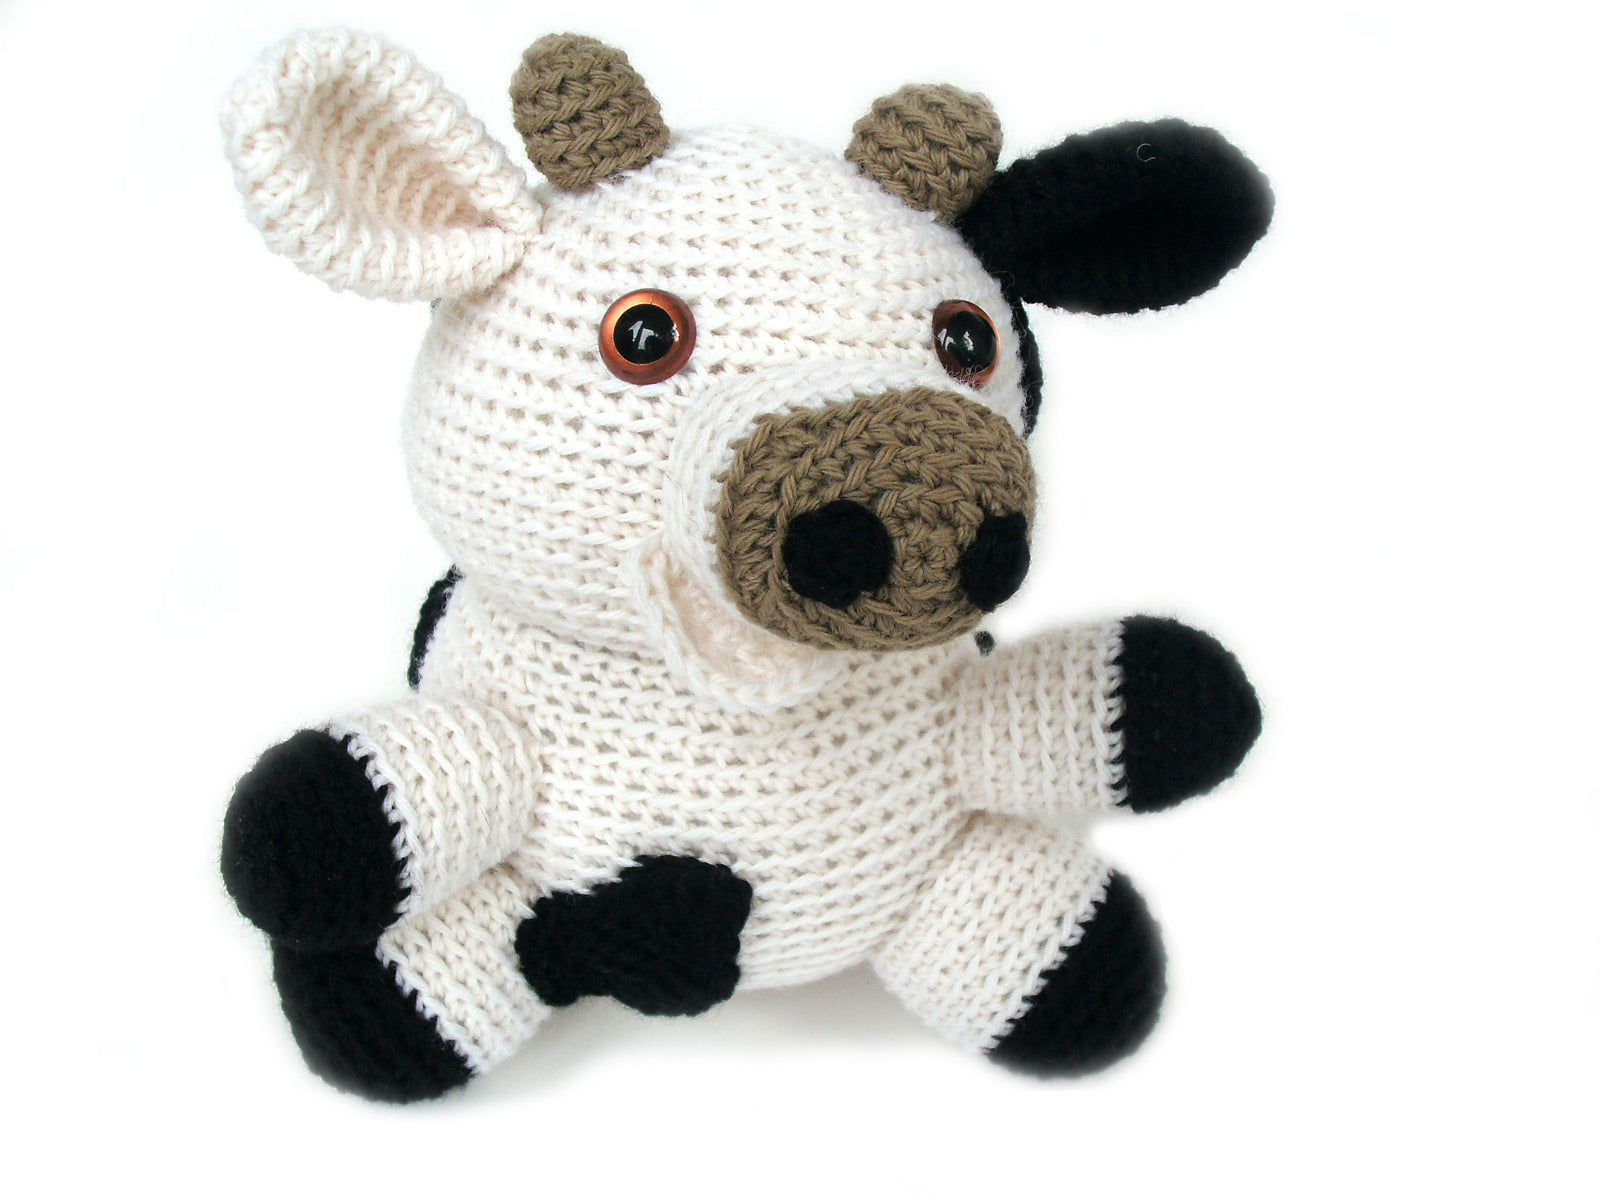 Jackie the Cow Crochet Amigurumi Pattern